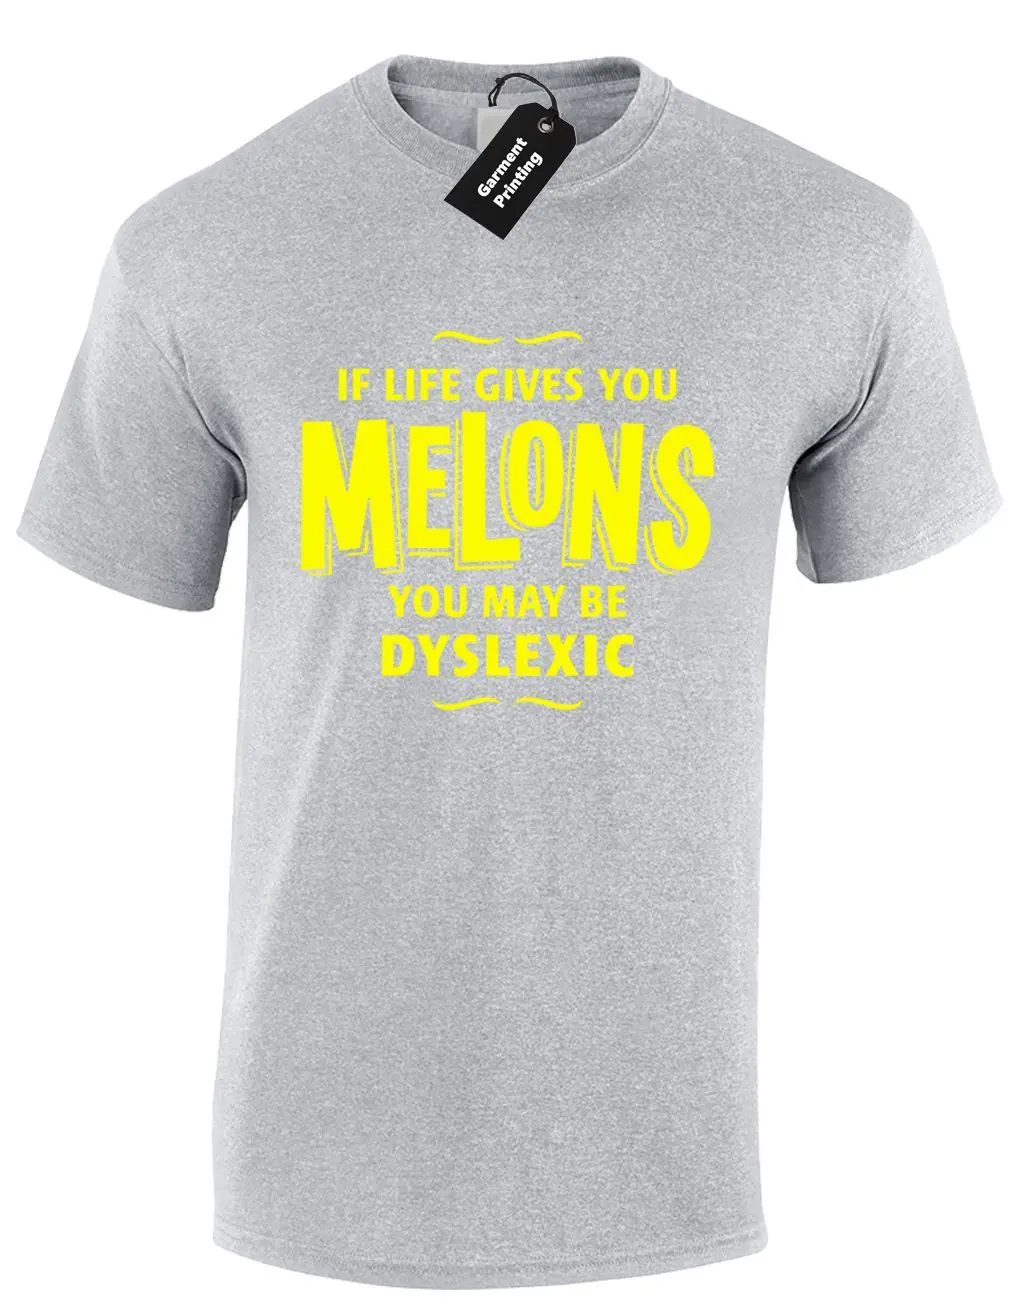 Мужская футболка с надписью IF LIFE Give YOU MELONS карикатура DYSLEXIA новинка со слоганом